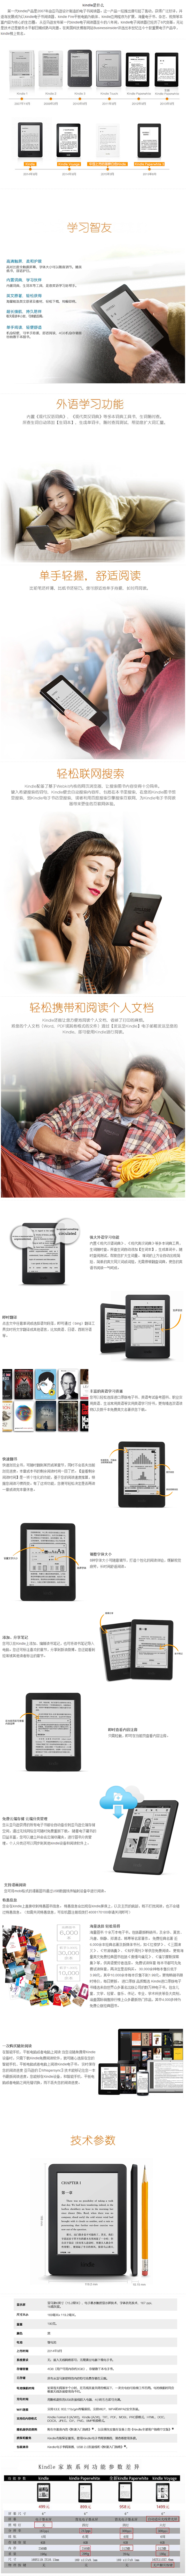 【KindleKindle】Kindle 6英寸护眼非反光电子墨水触控显示屏 内置wifi 4G 电.png